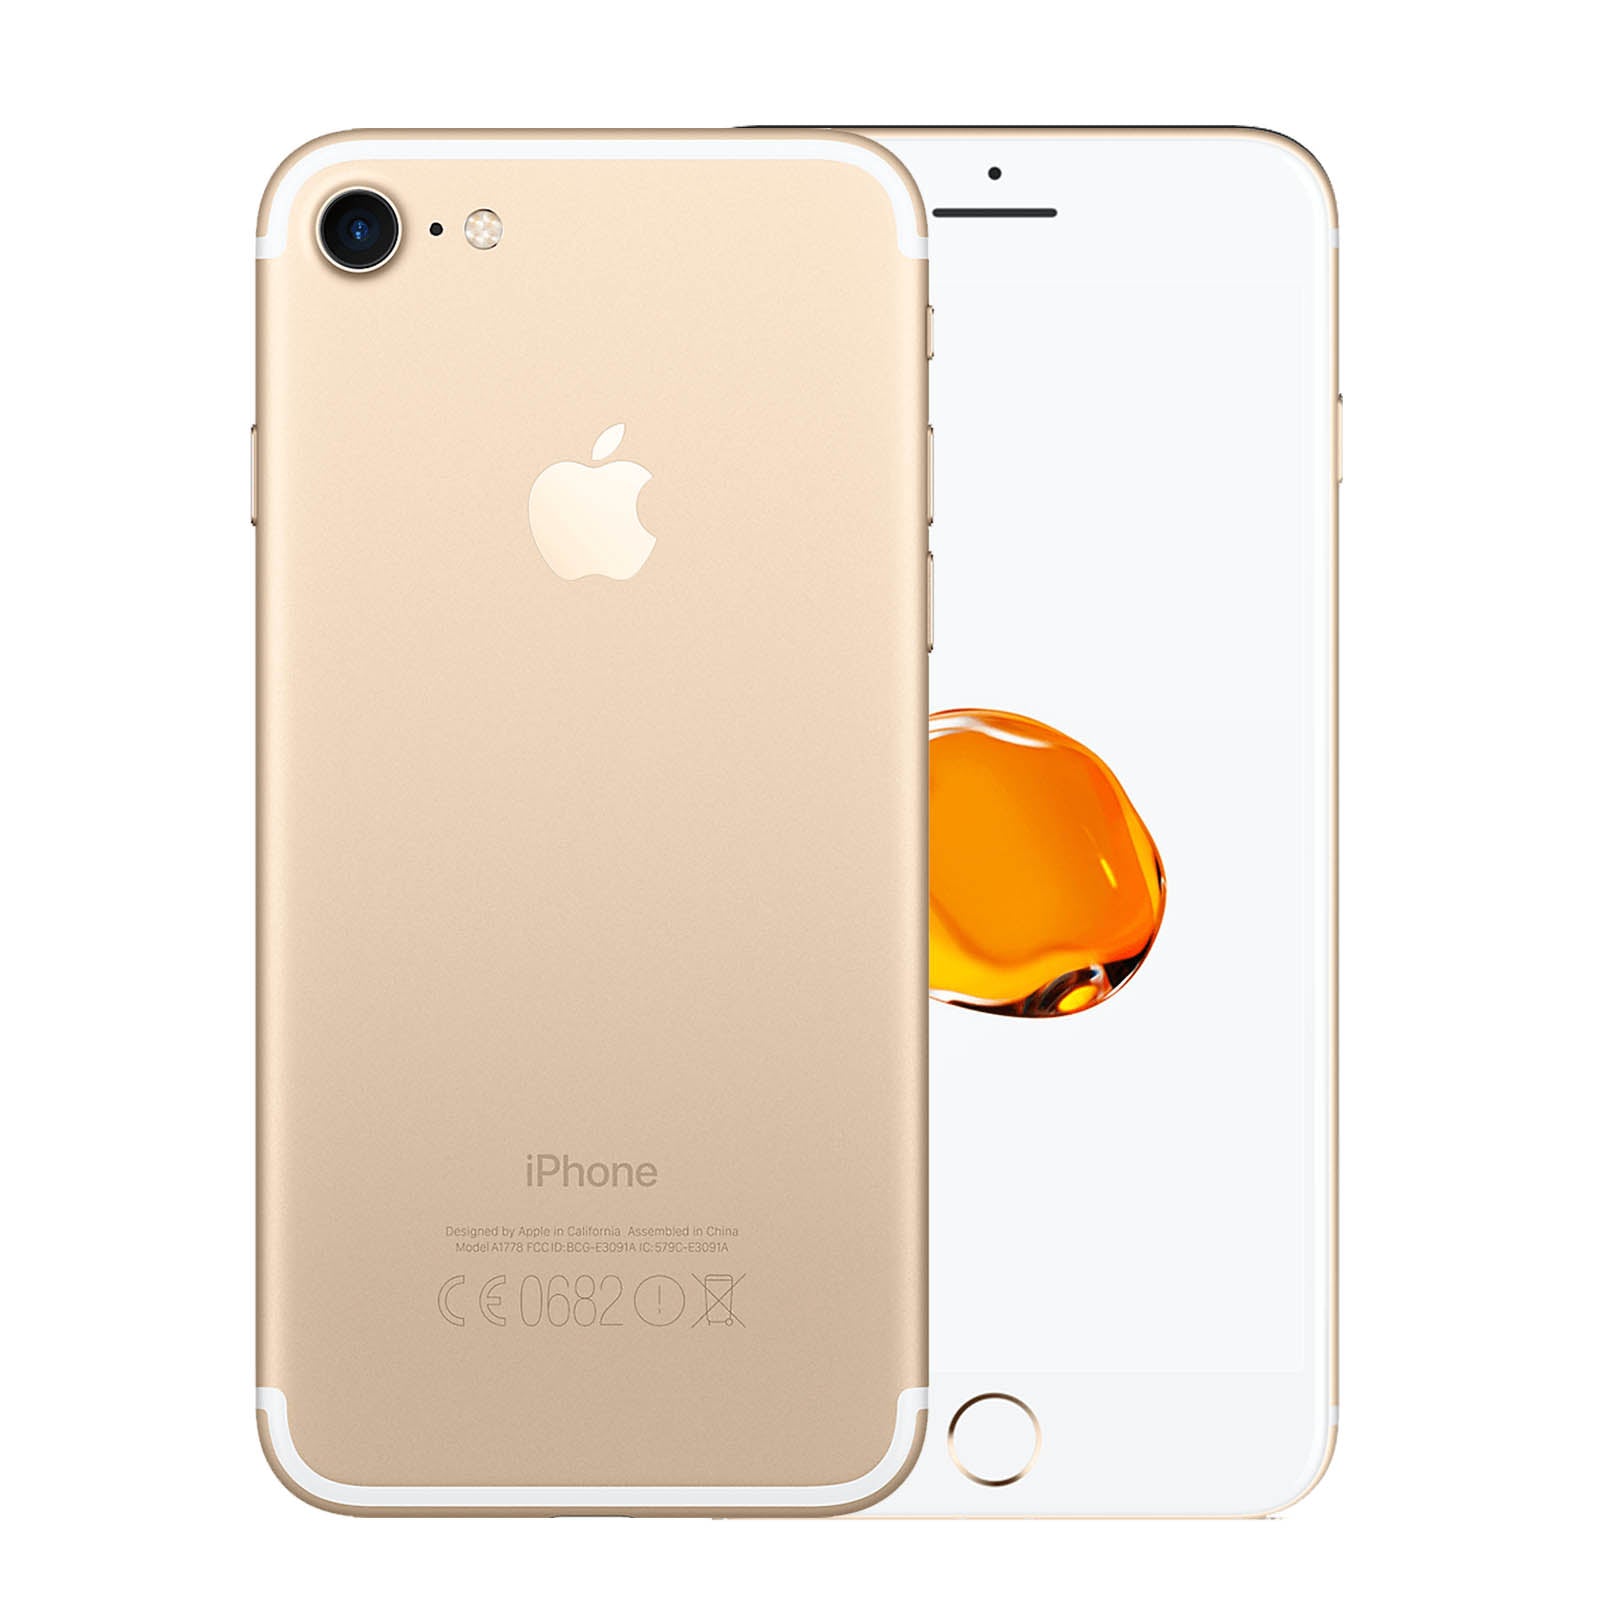 Apple iPhone 7 32GB Gold Good - Unlocked